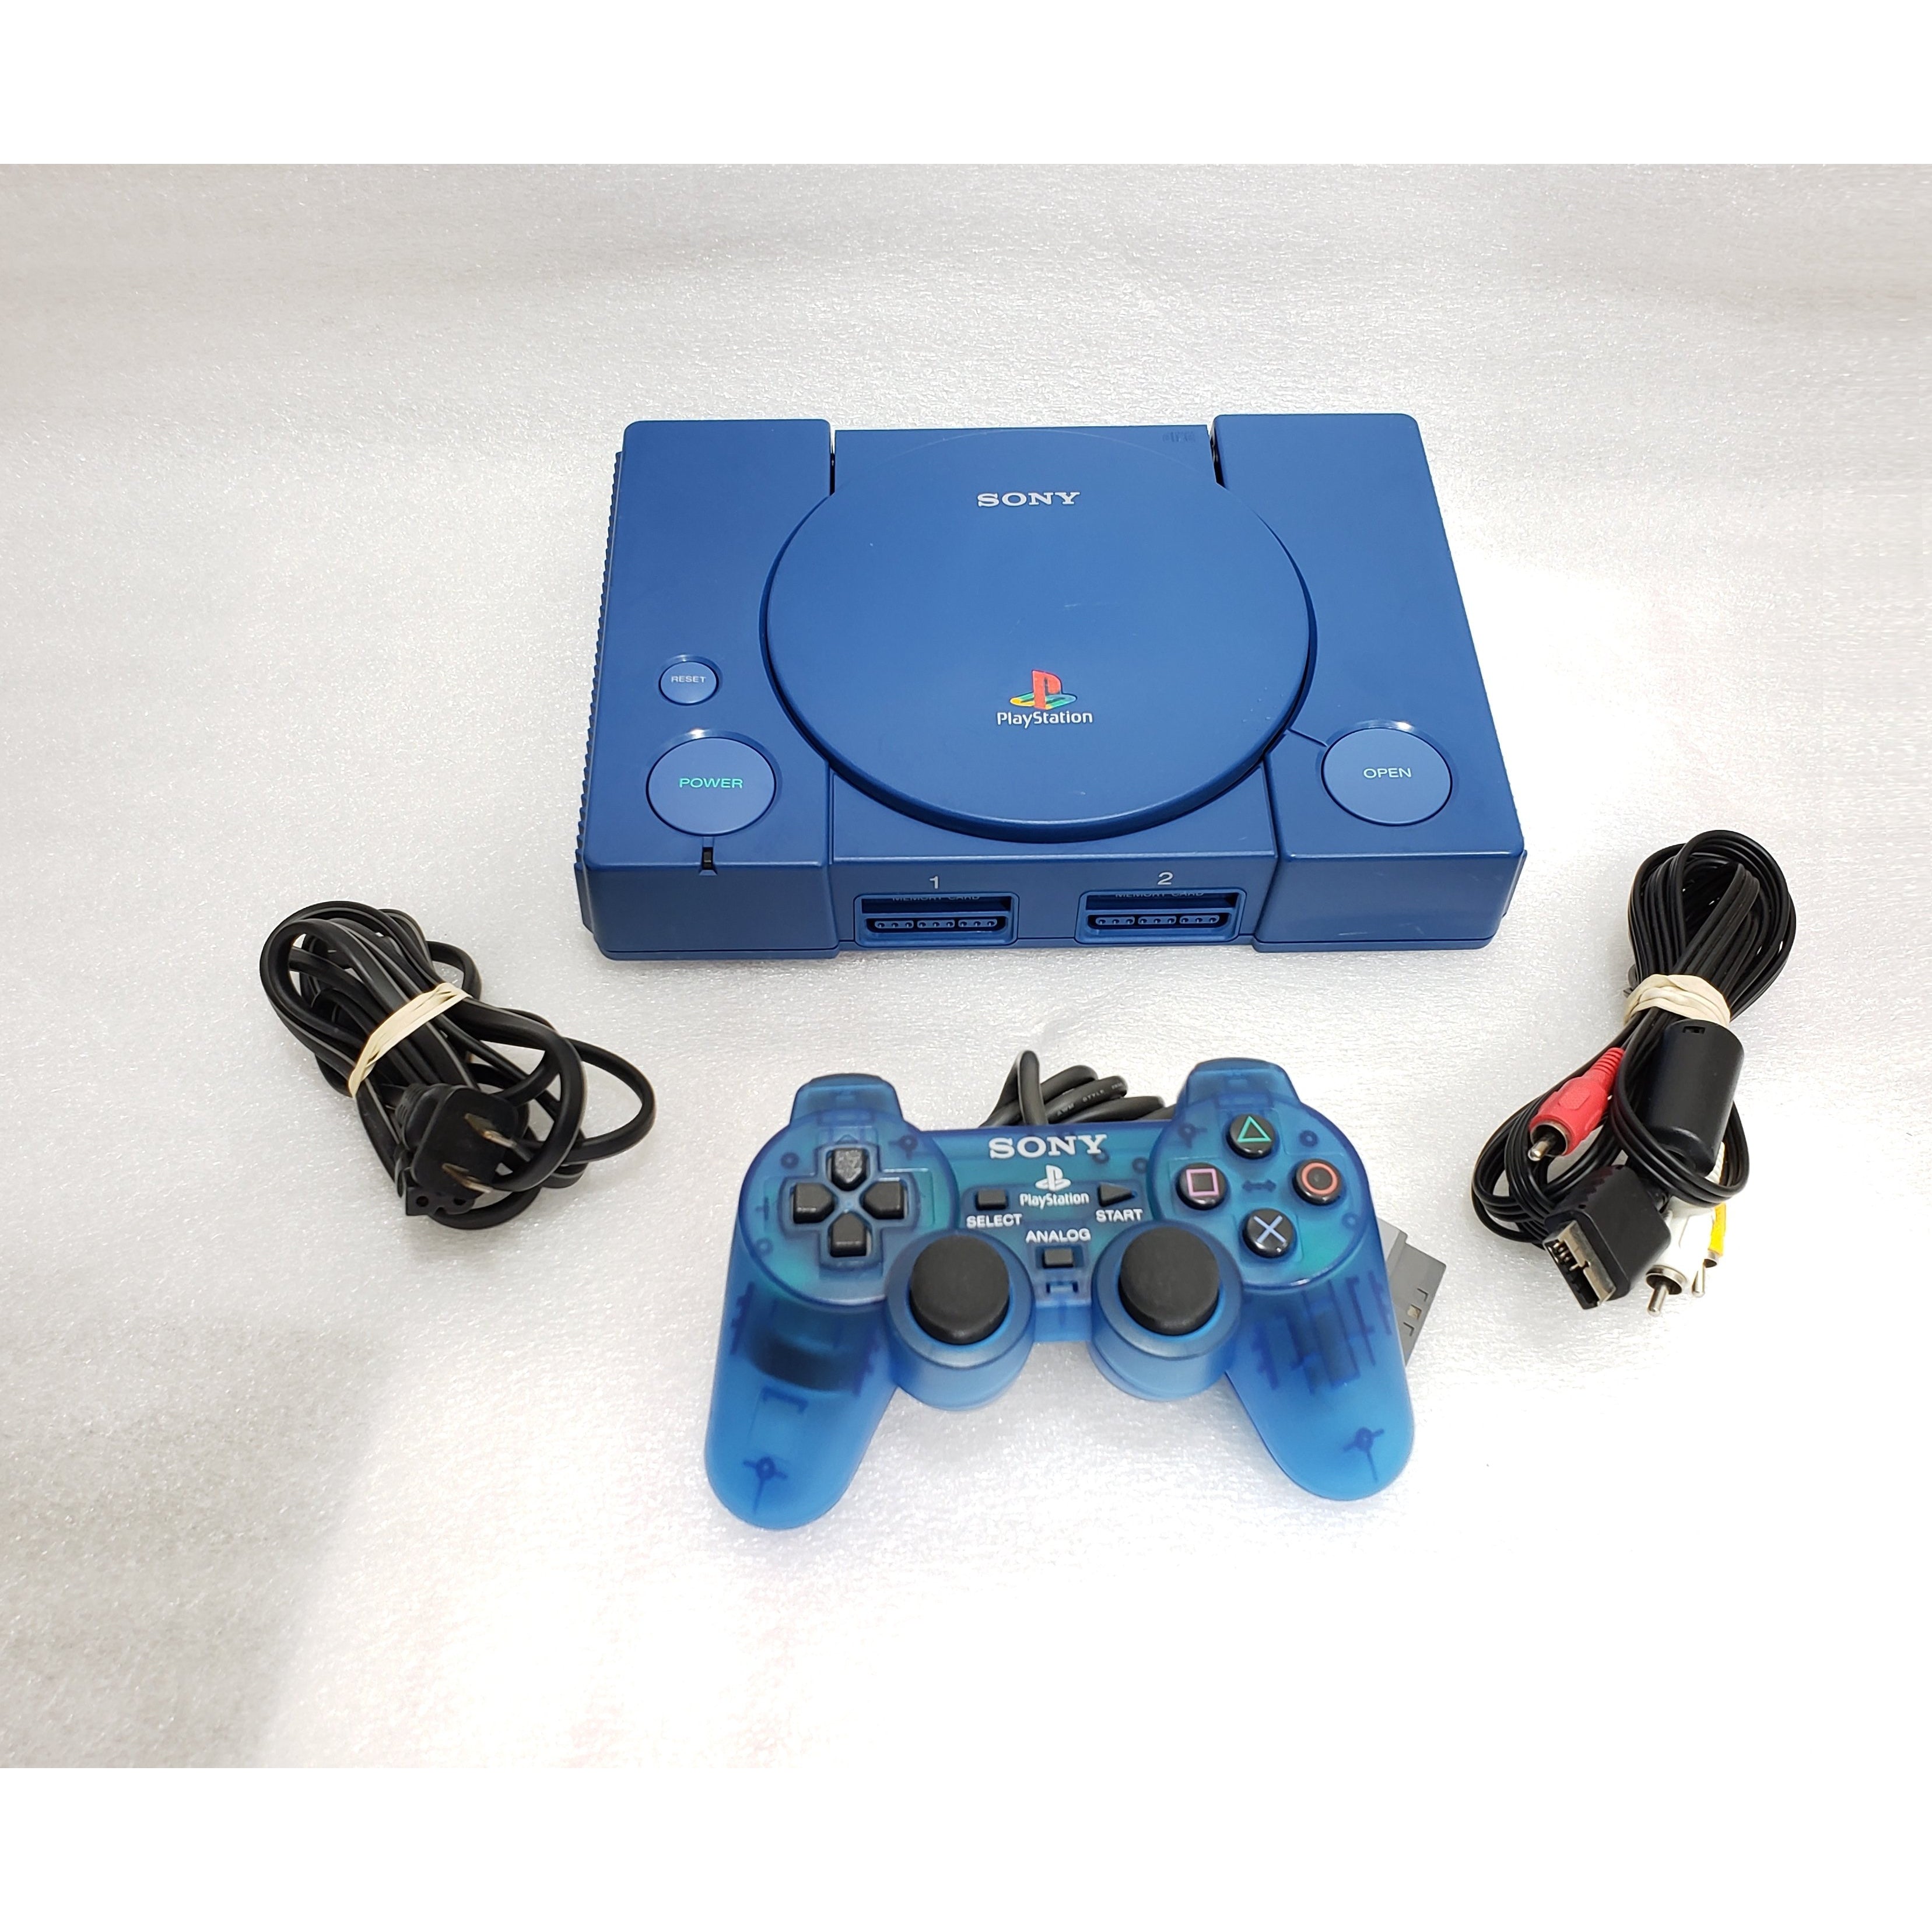 Your Gaming Shop - Sony PlayStation 1 Debugging Station System (DTL-H1000)